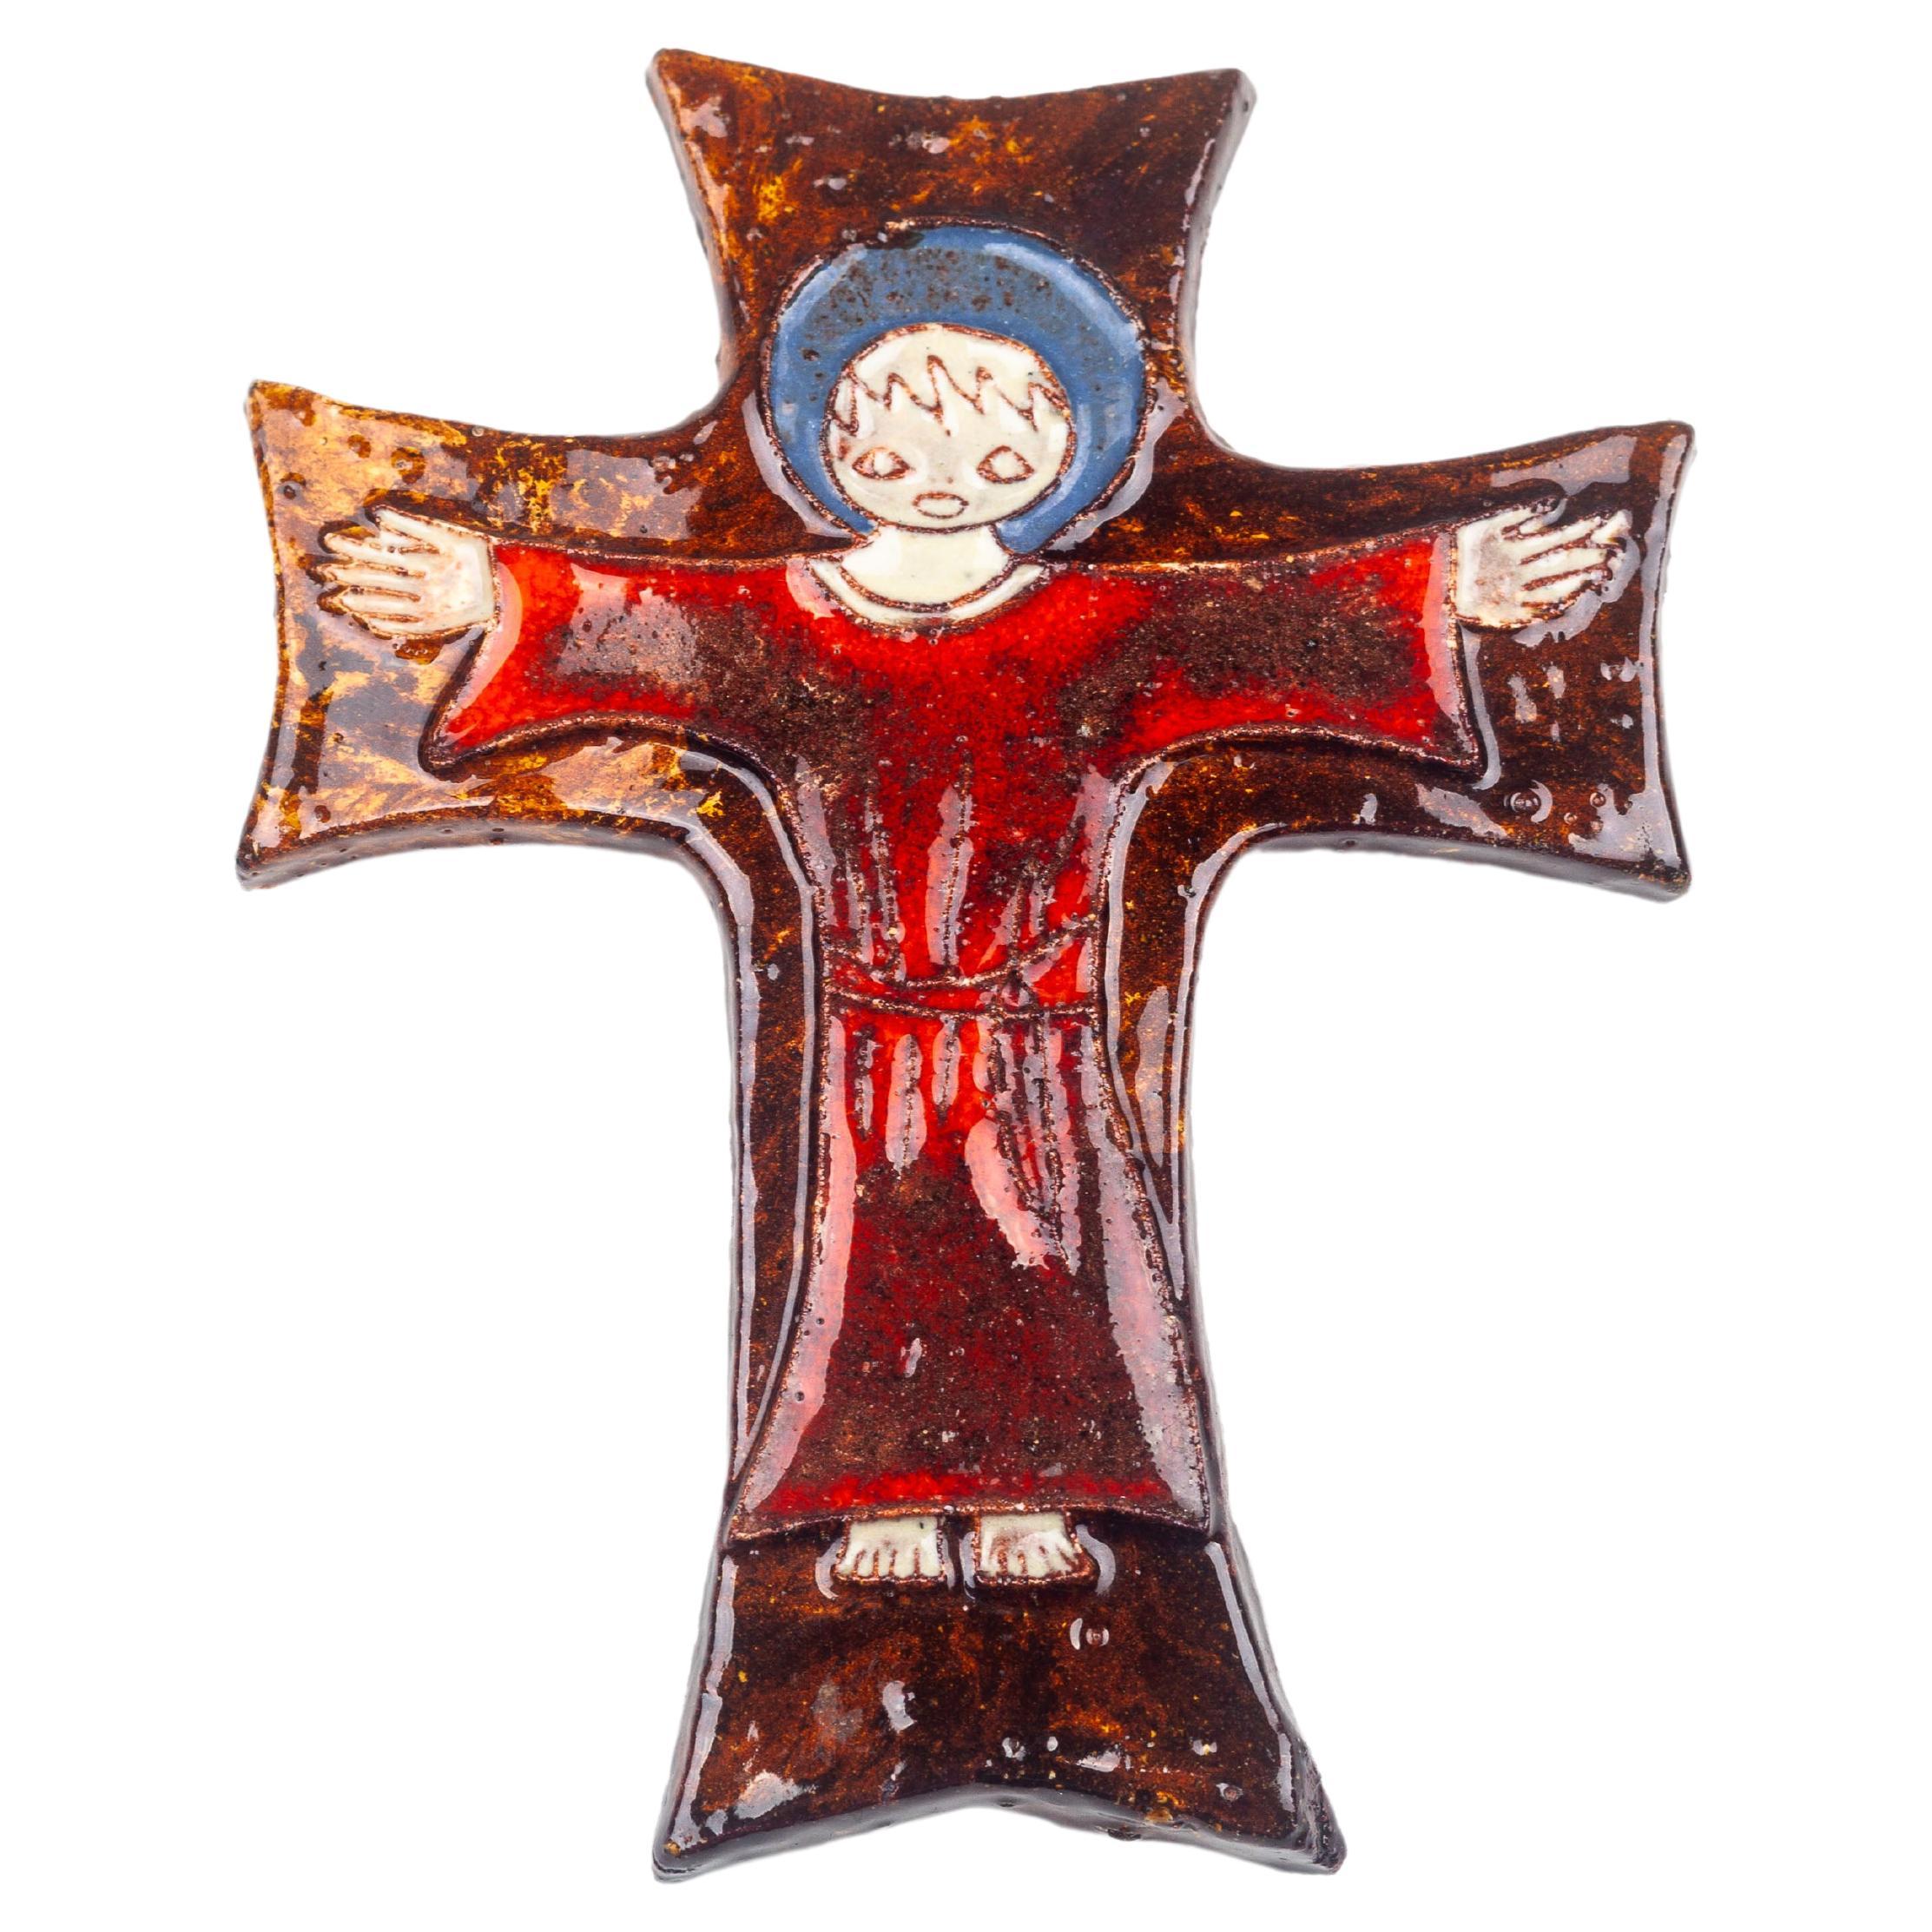 Mid-Century Modern Stylized Figurative Cross